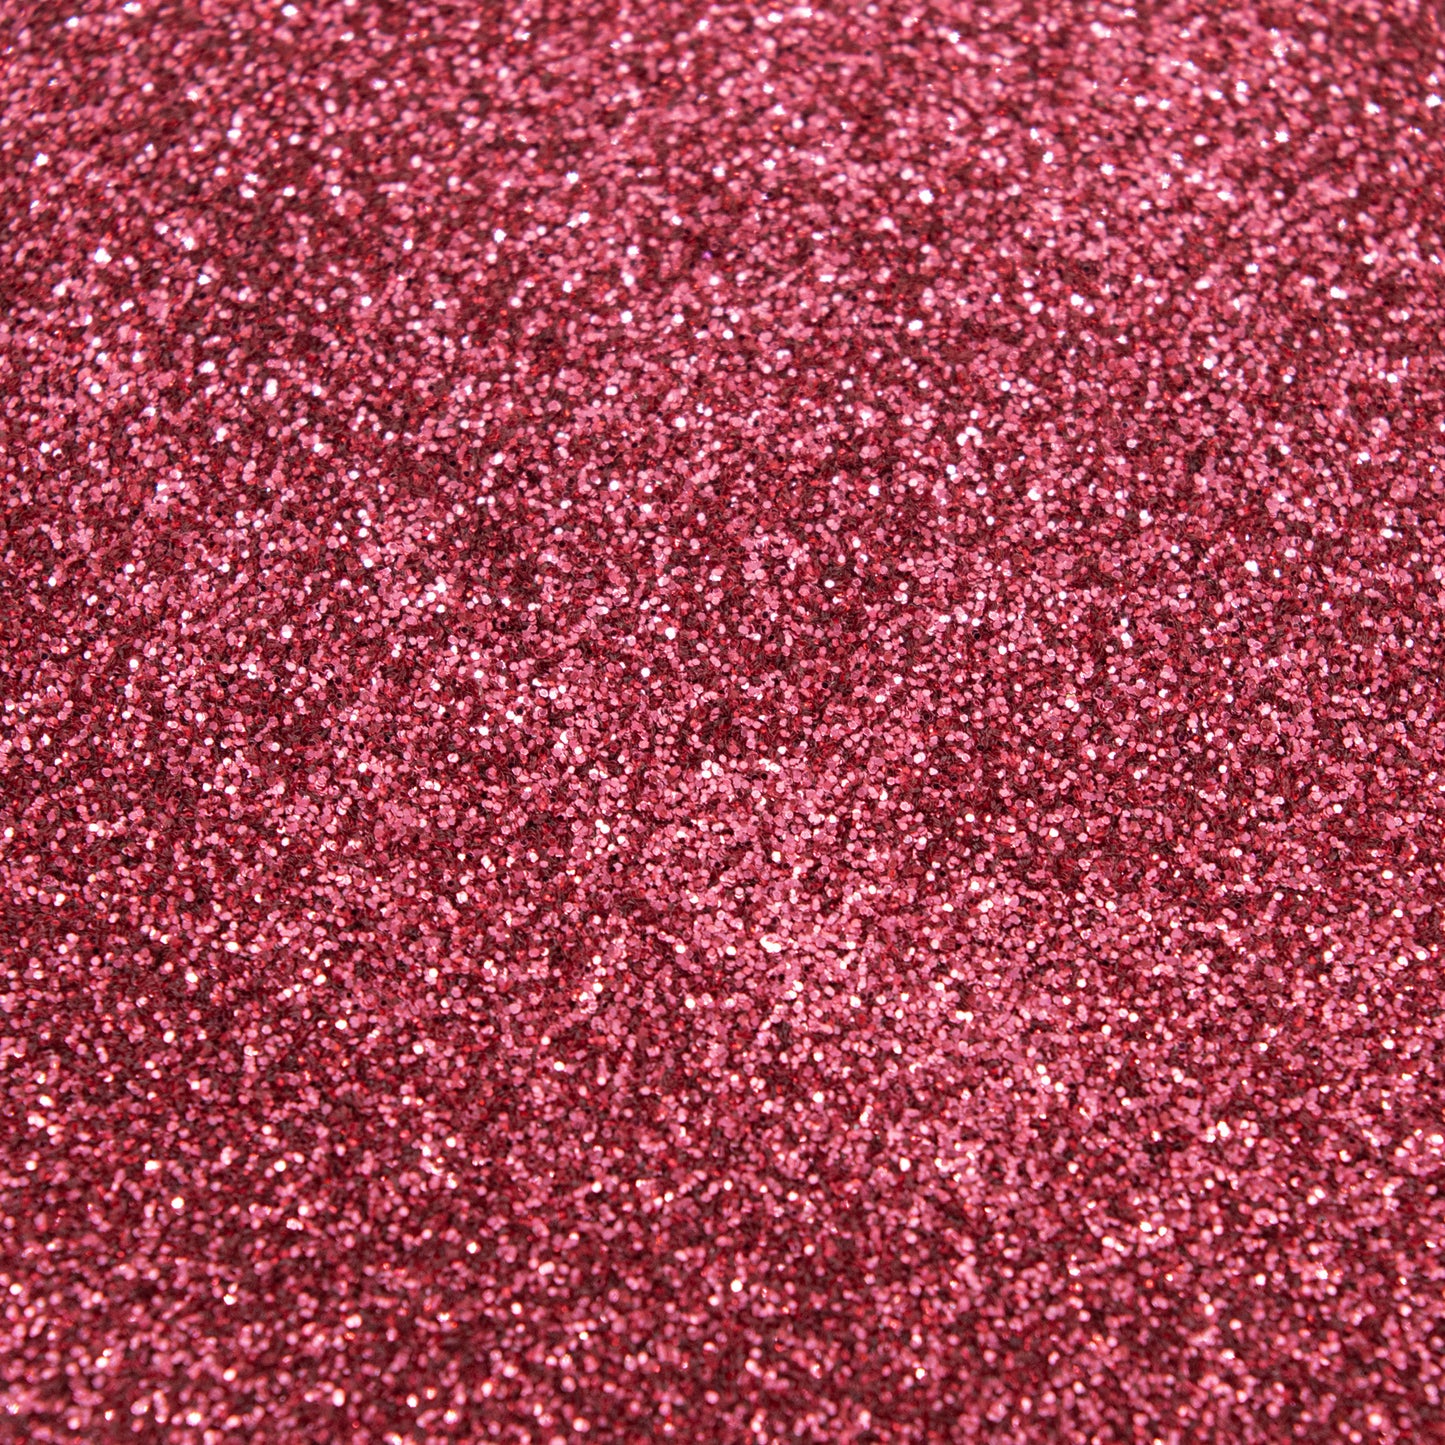 Glitter Standard Rose Pink 1kg BULK - Default (GLITSTROSE1KG)